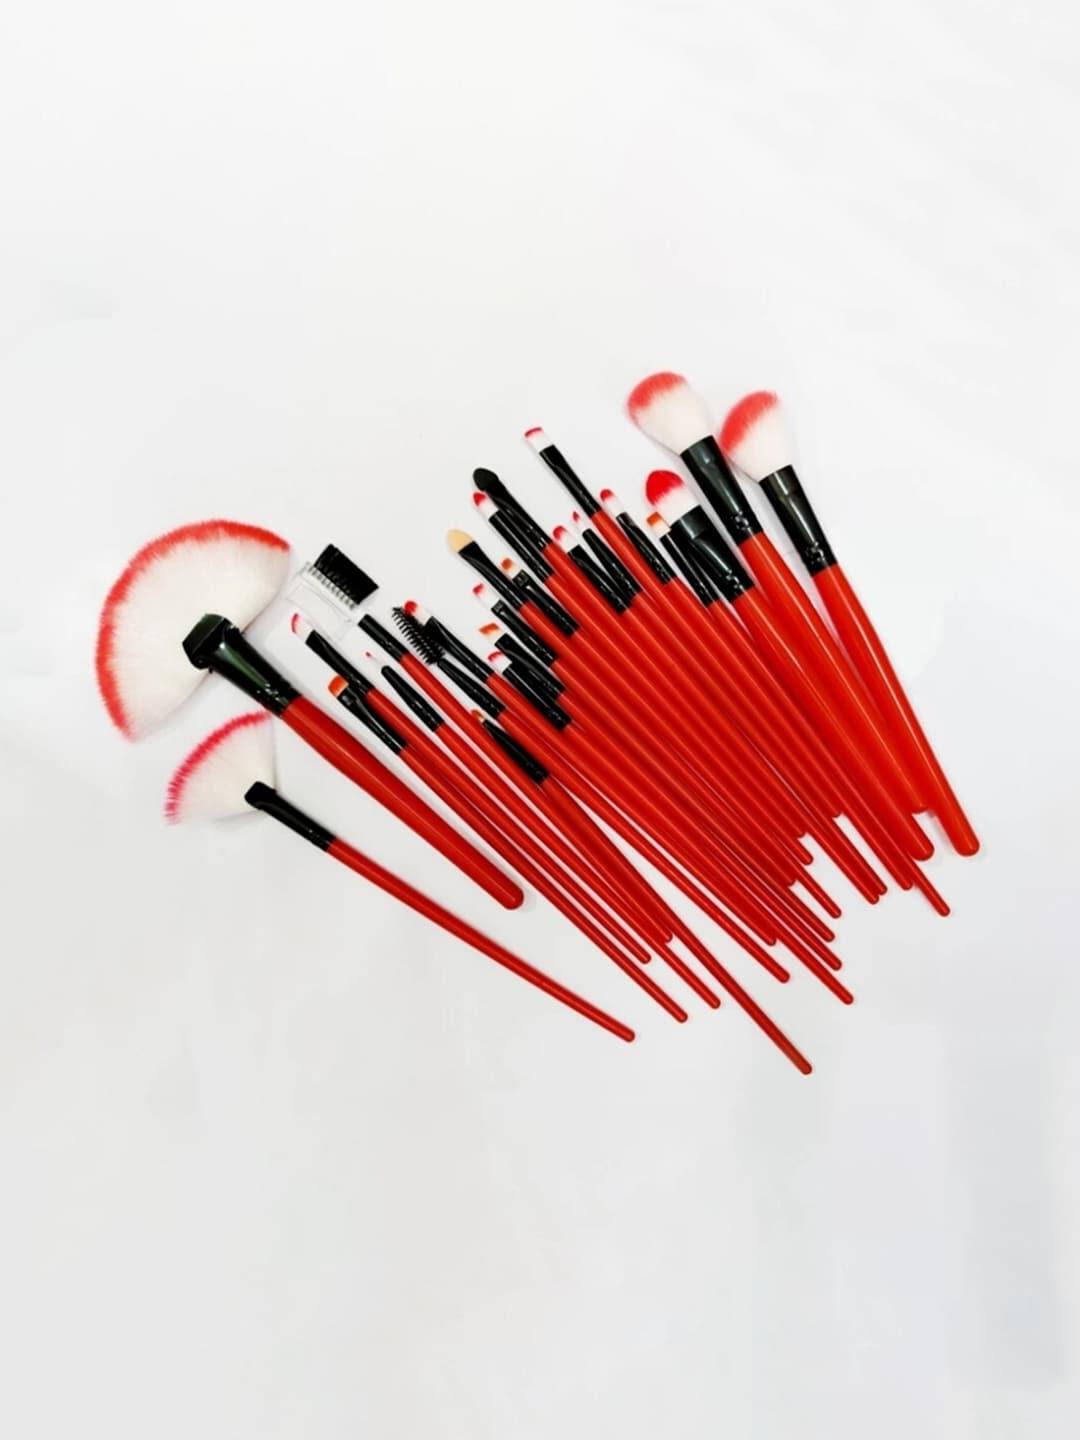 feelhigh 24 pcs soft hair makeup brush set - red & black